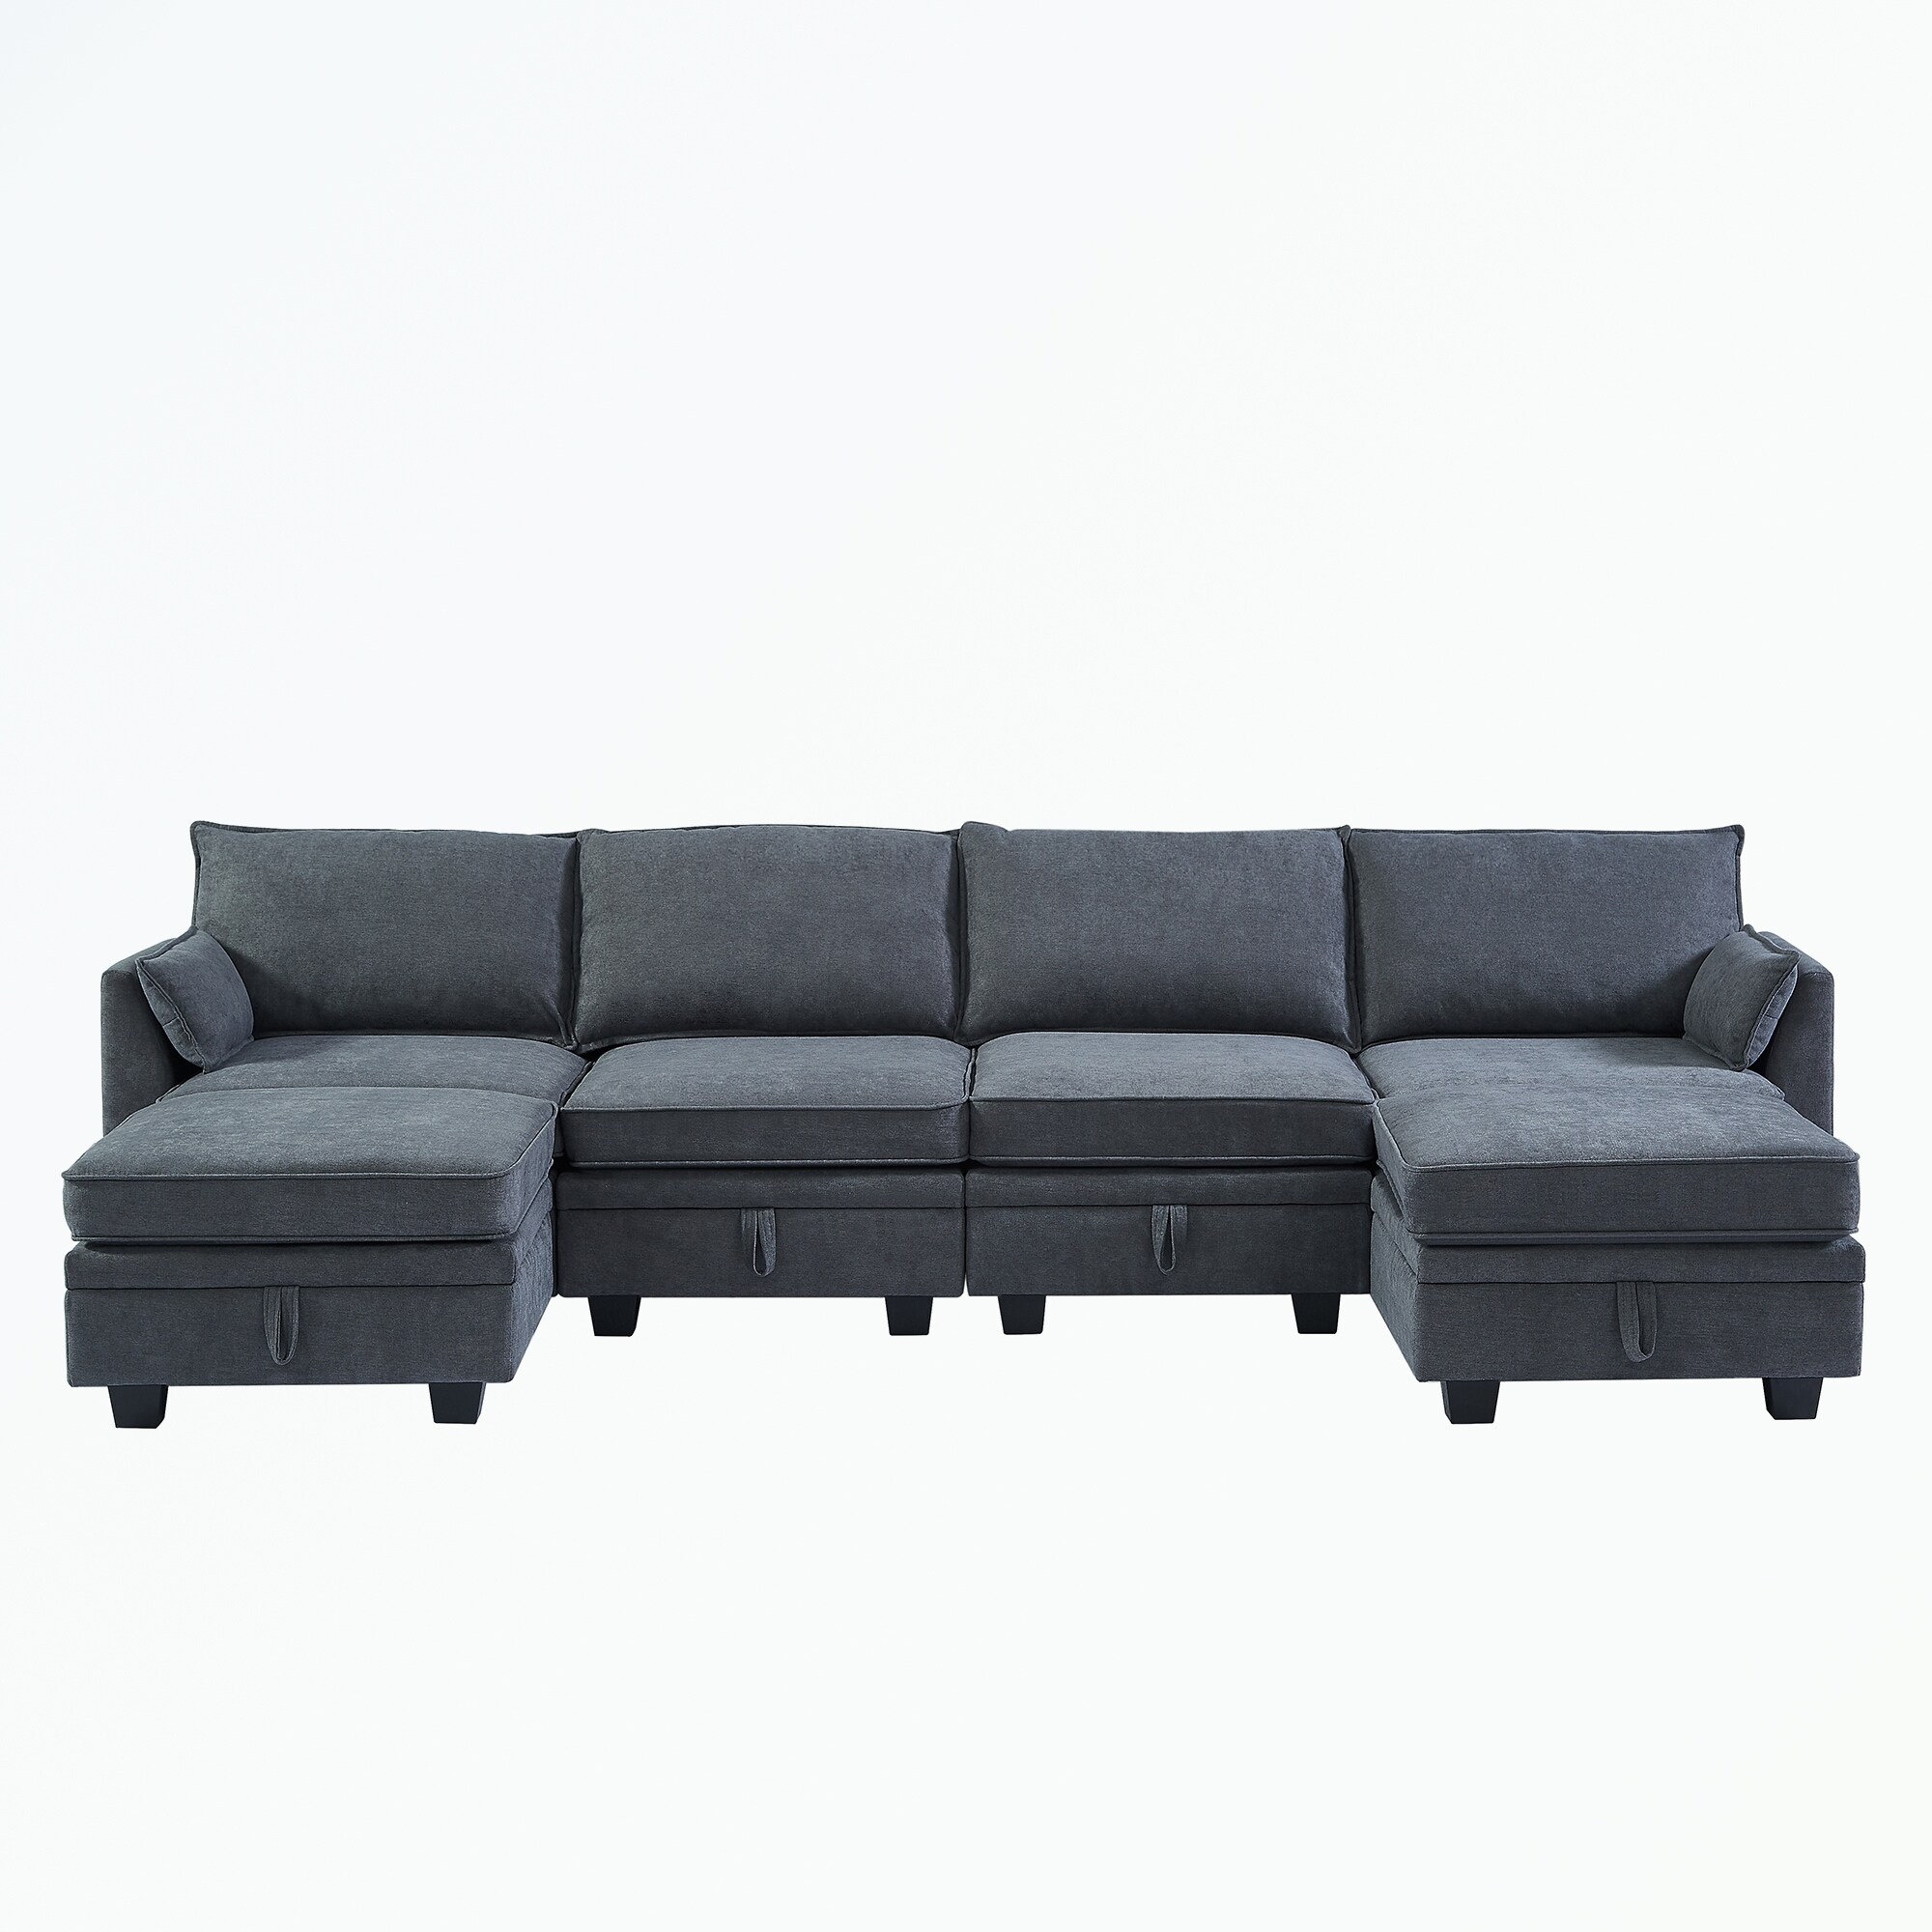 U-Shape Modular Sectional Sofa with Reversible Chaise,Storage Seat - Dark Grey